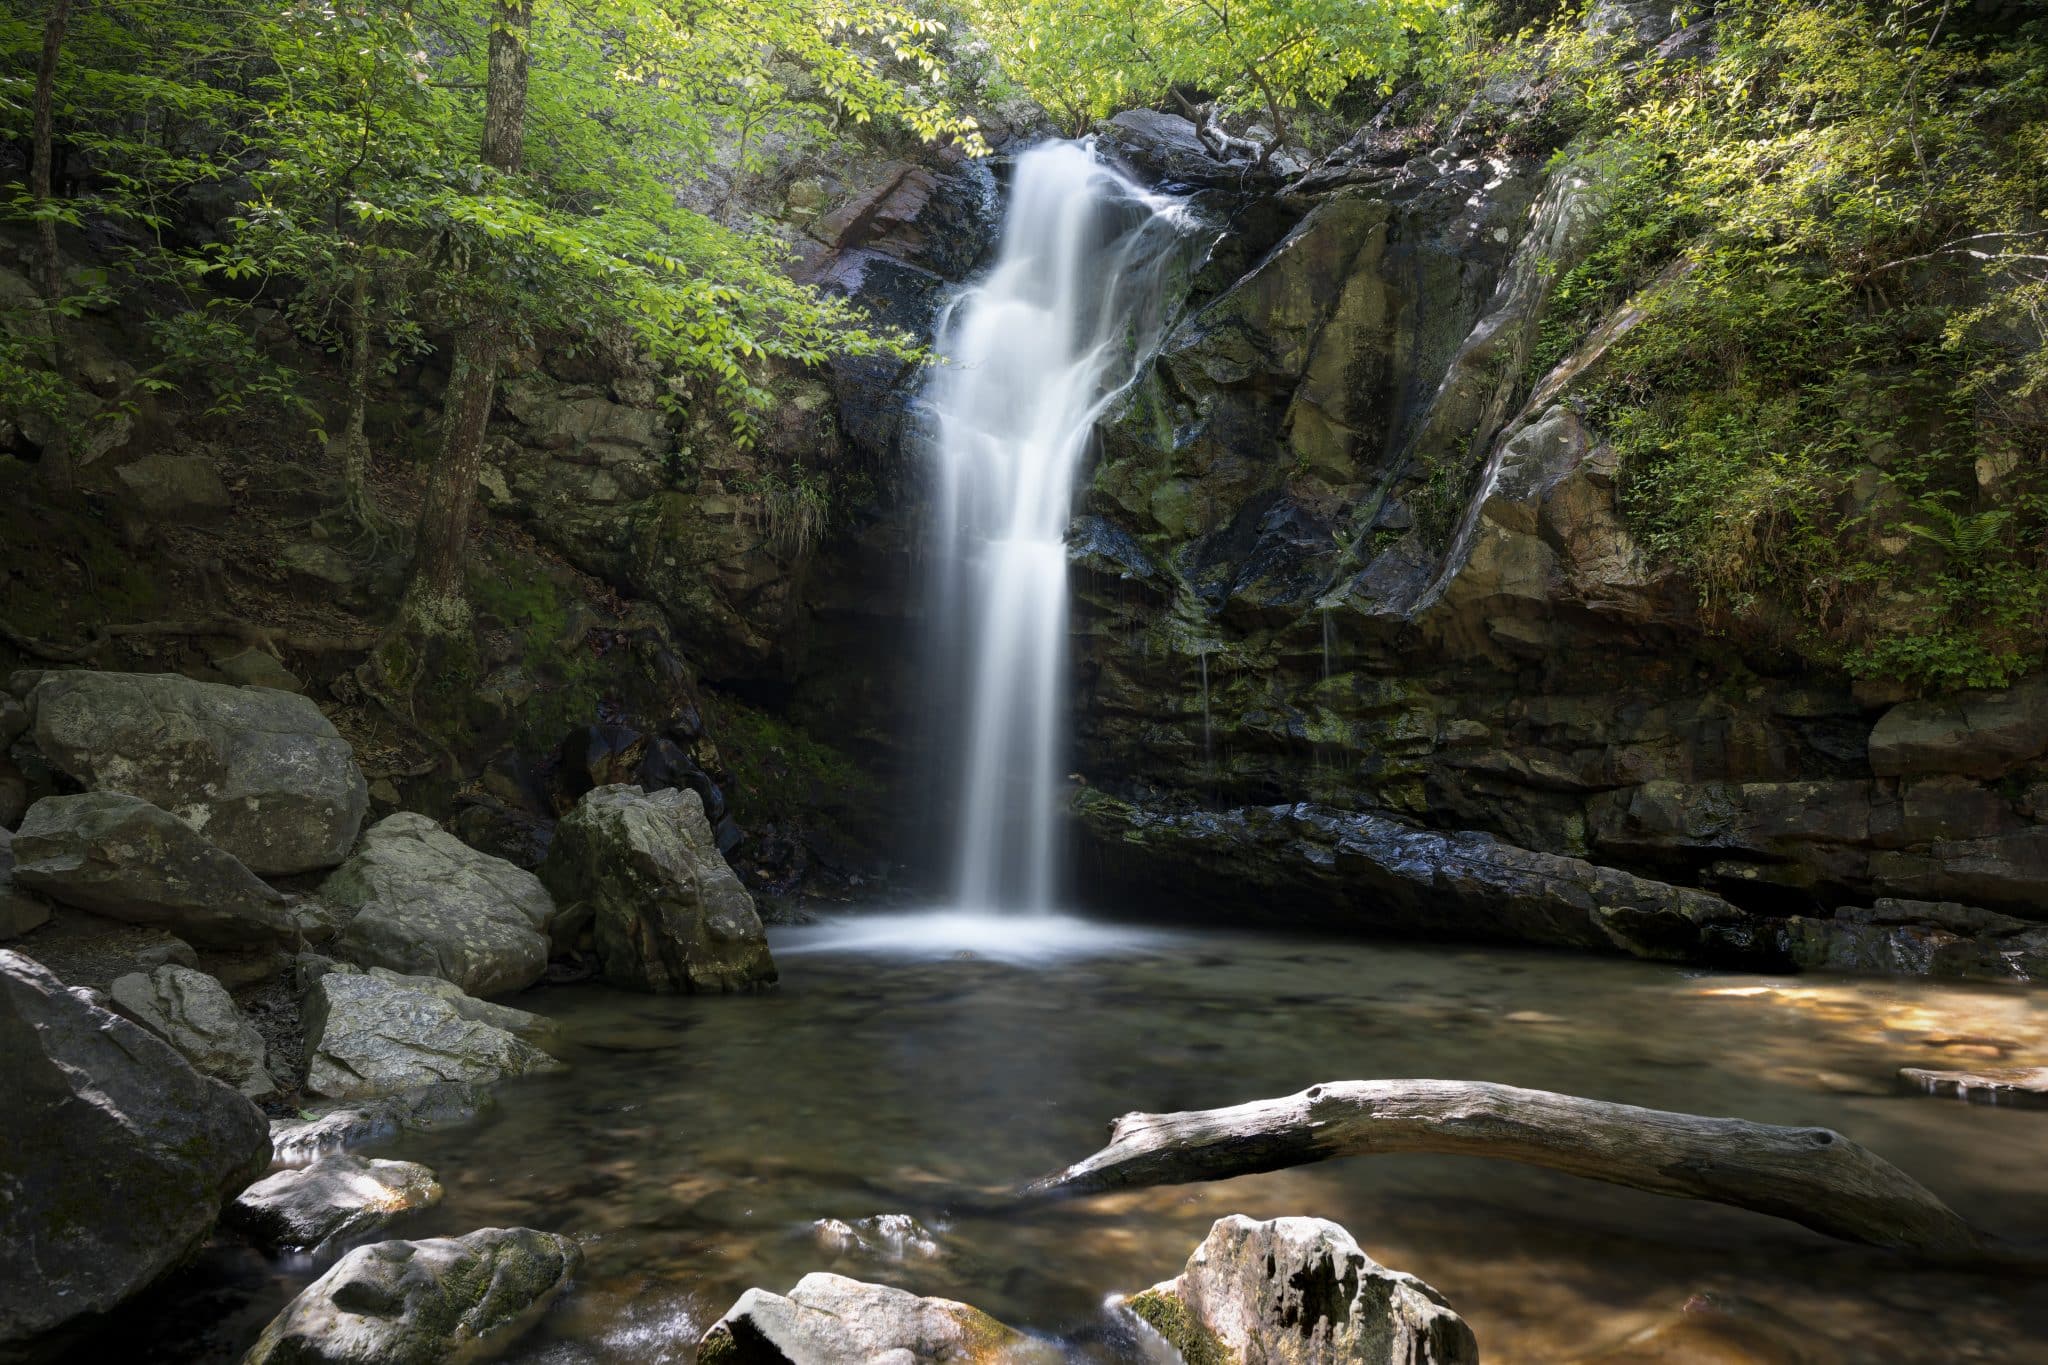 Peavine falls in Oak Mountain State park, just a short drive from Dunnavant Valley & Shoal Creek luxury neighborhood